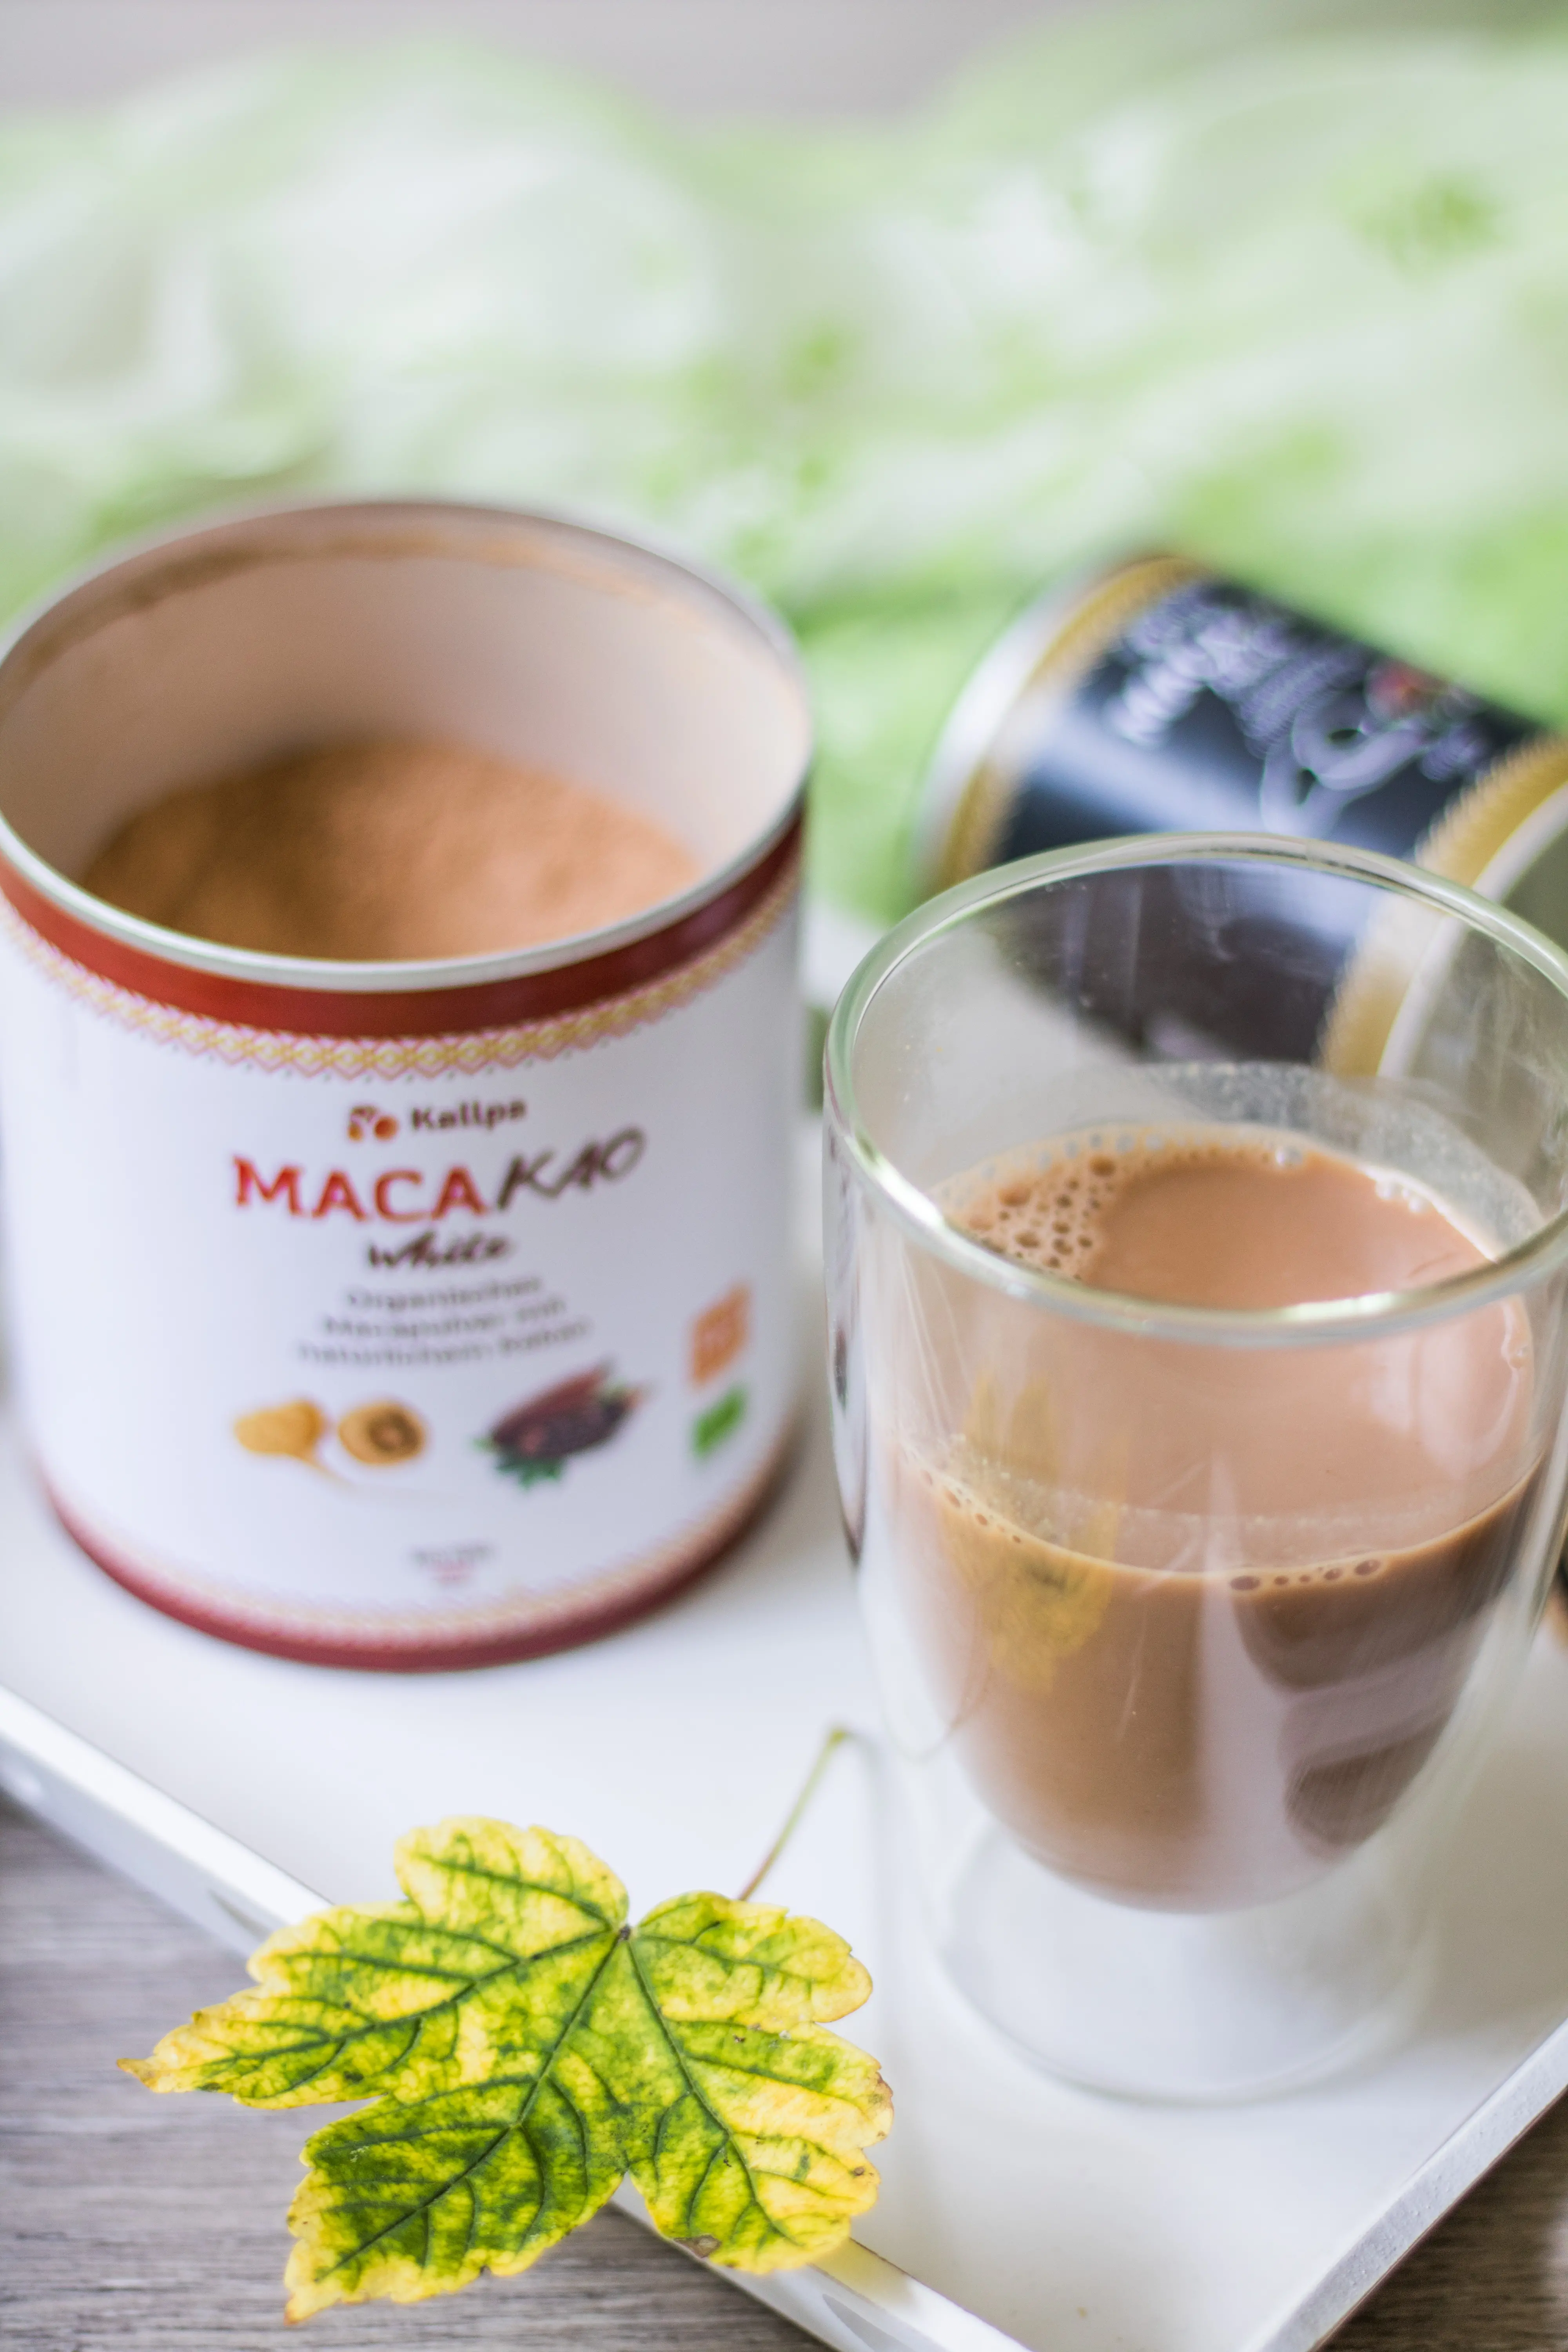 Macakao Getränk. Kakao und Macapulver